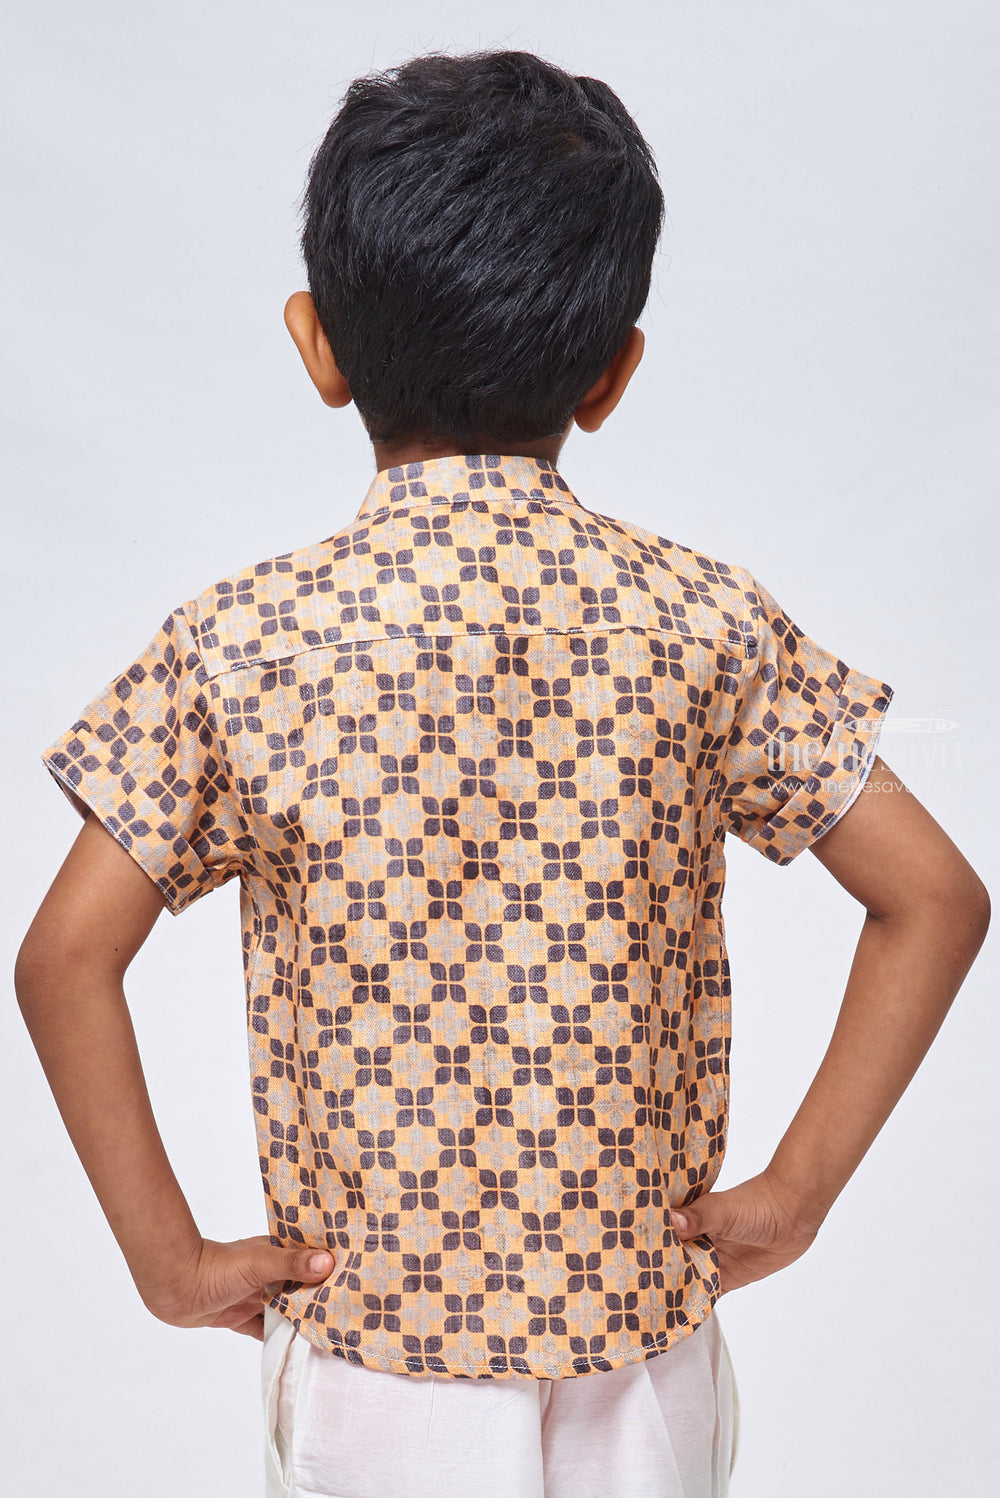 The Nesavu Boys Linen Shirt Karaikudi Chettinad Tile Inspires Print Boys Linen Shirt for a Free-Spirited Look Nesavu Tile-Inspired Printed Boys Linen Shirt | Kids Printed Shirt | The Nesavu